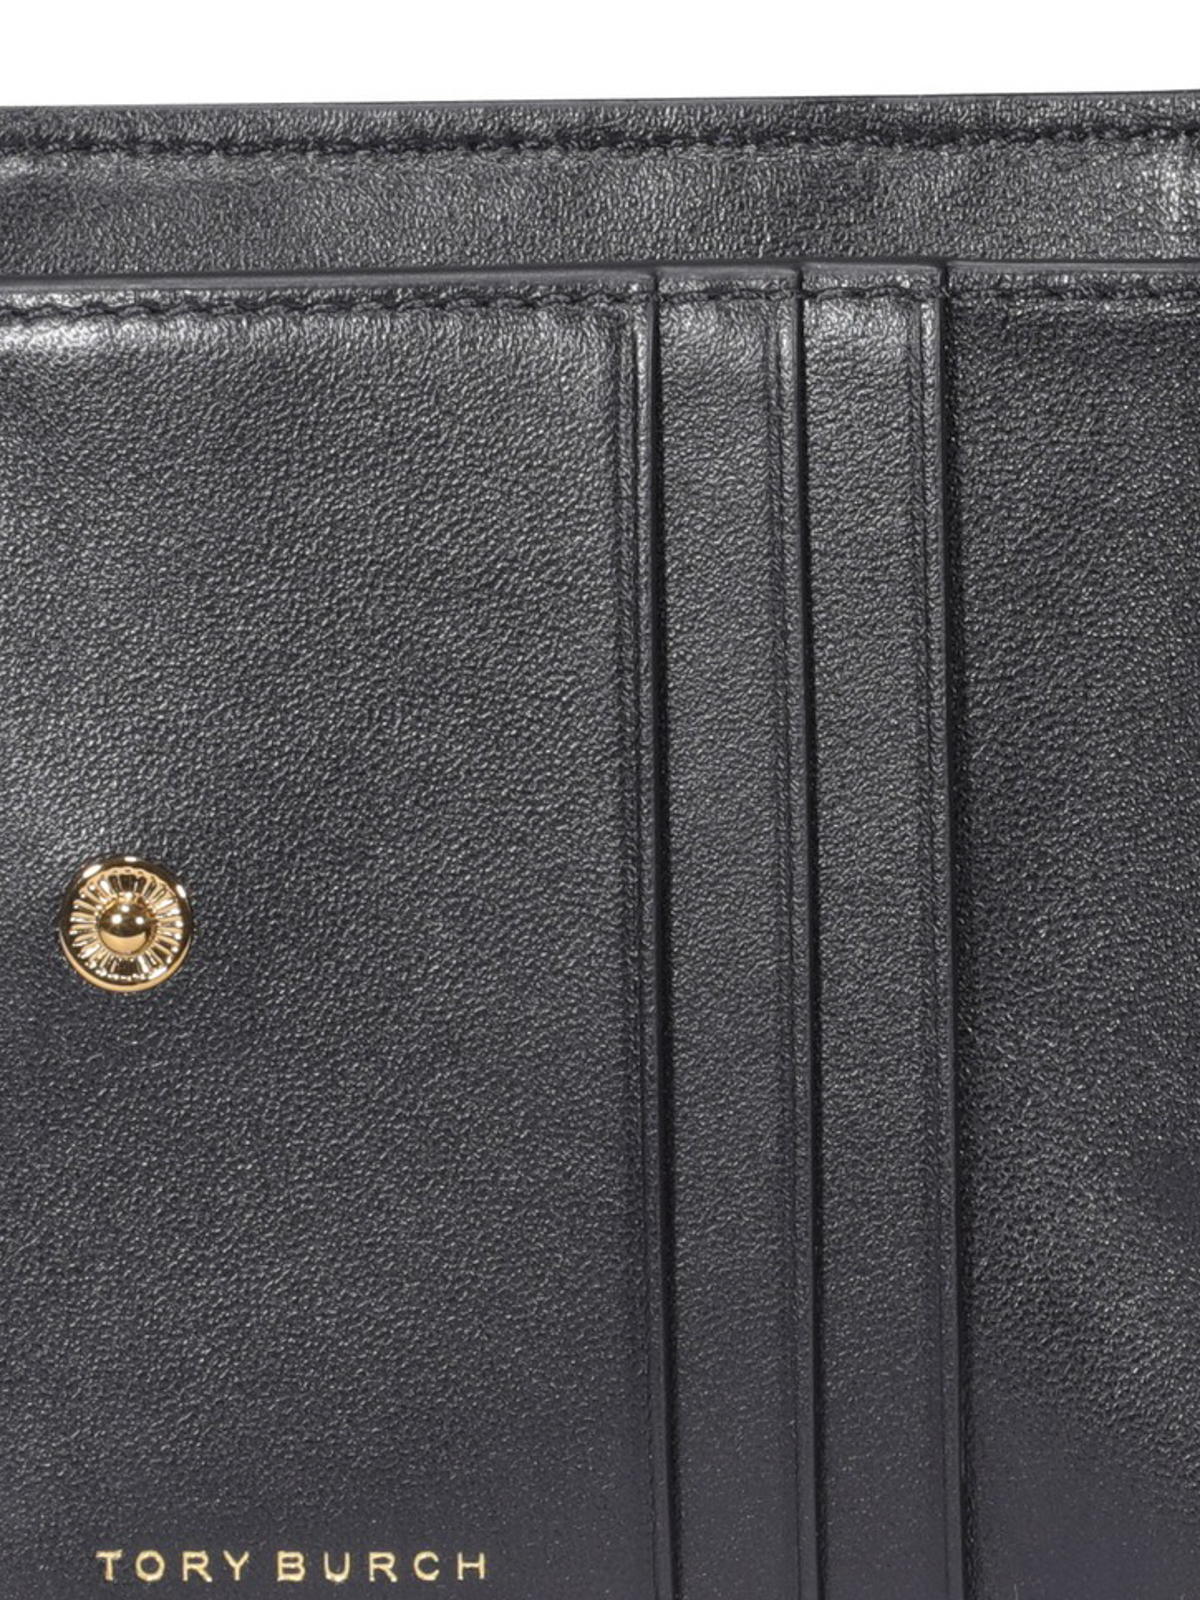 Tory Burch Kira Chevron Leather Card Case Black